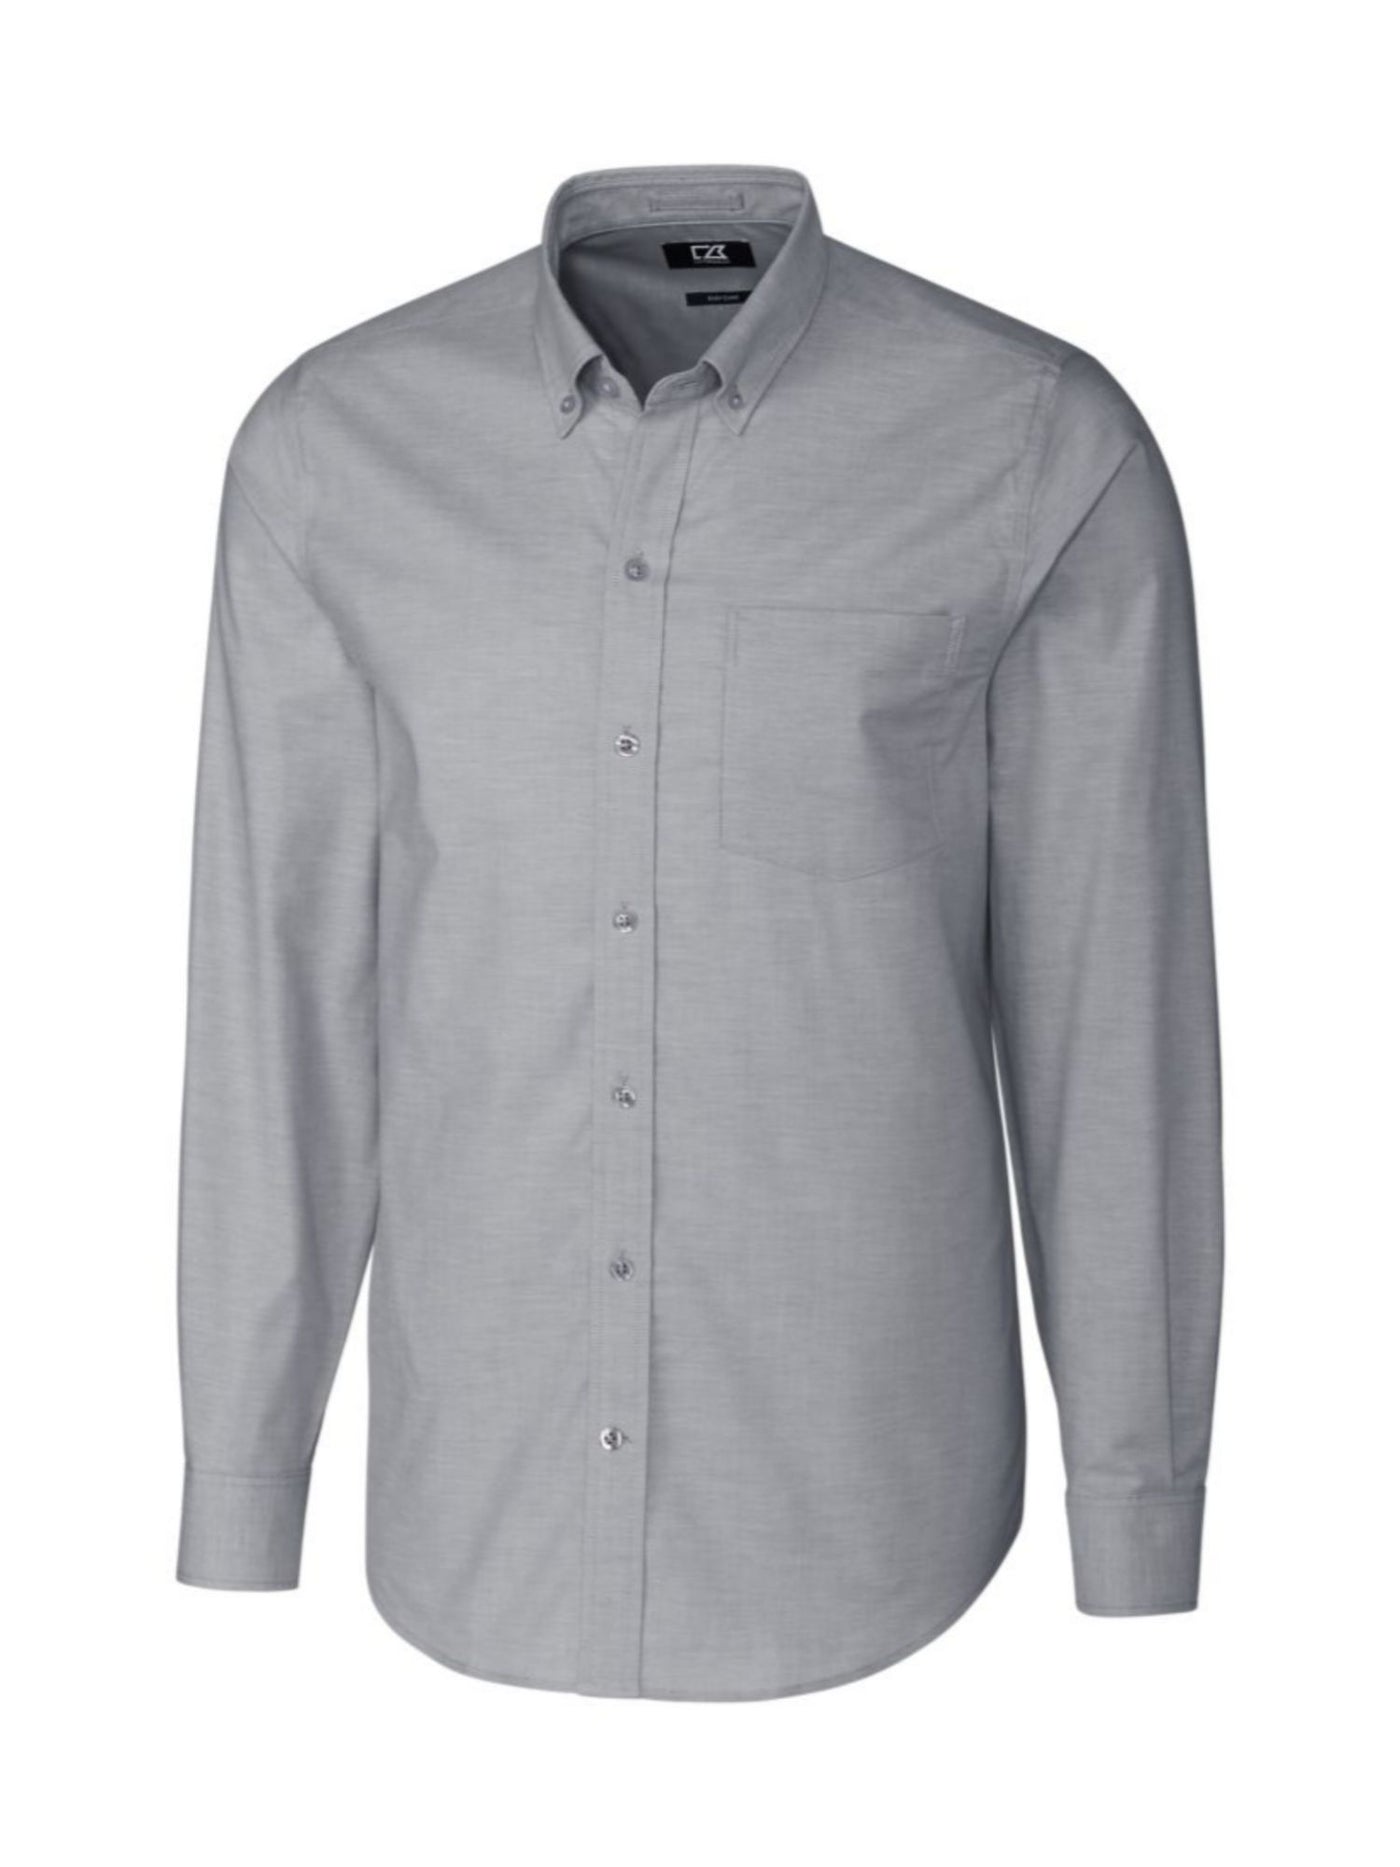 CUTTER & BUCK Mens Oxford Gray Long Sleeve Classic Fit Button Down Stretch Casual Shirt 3XT